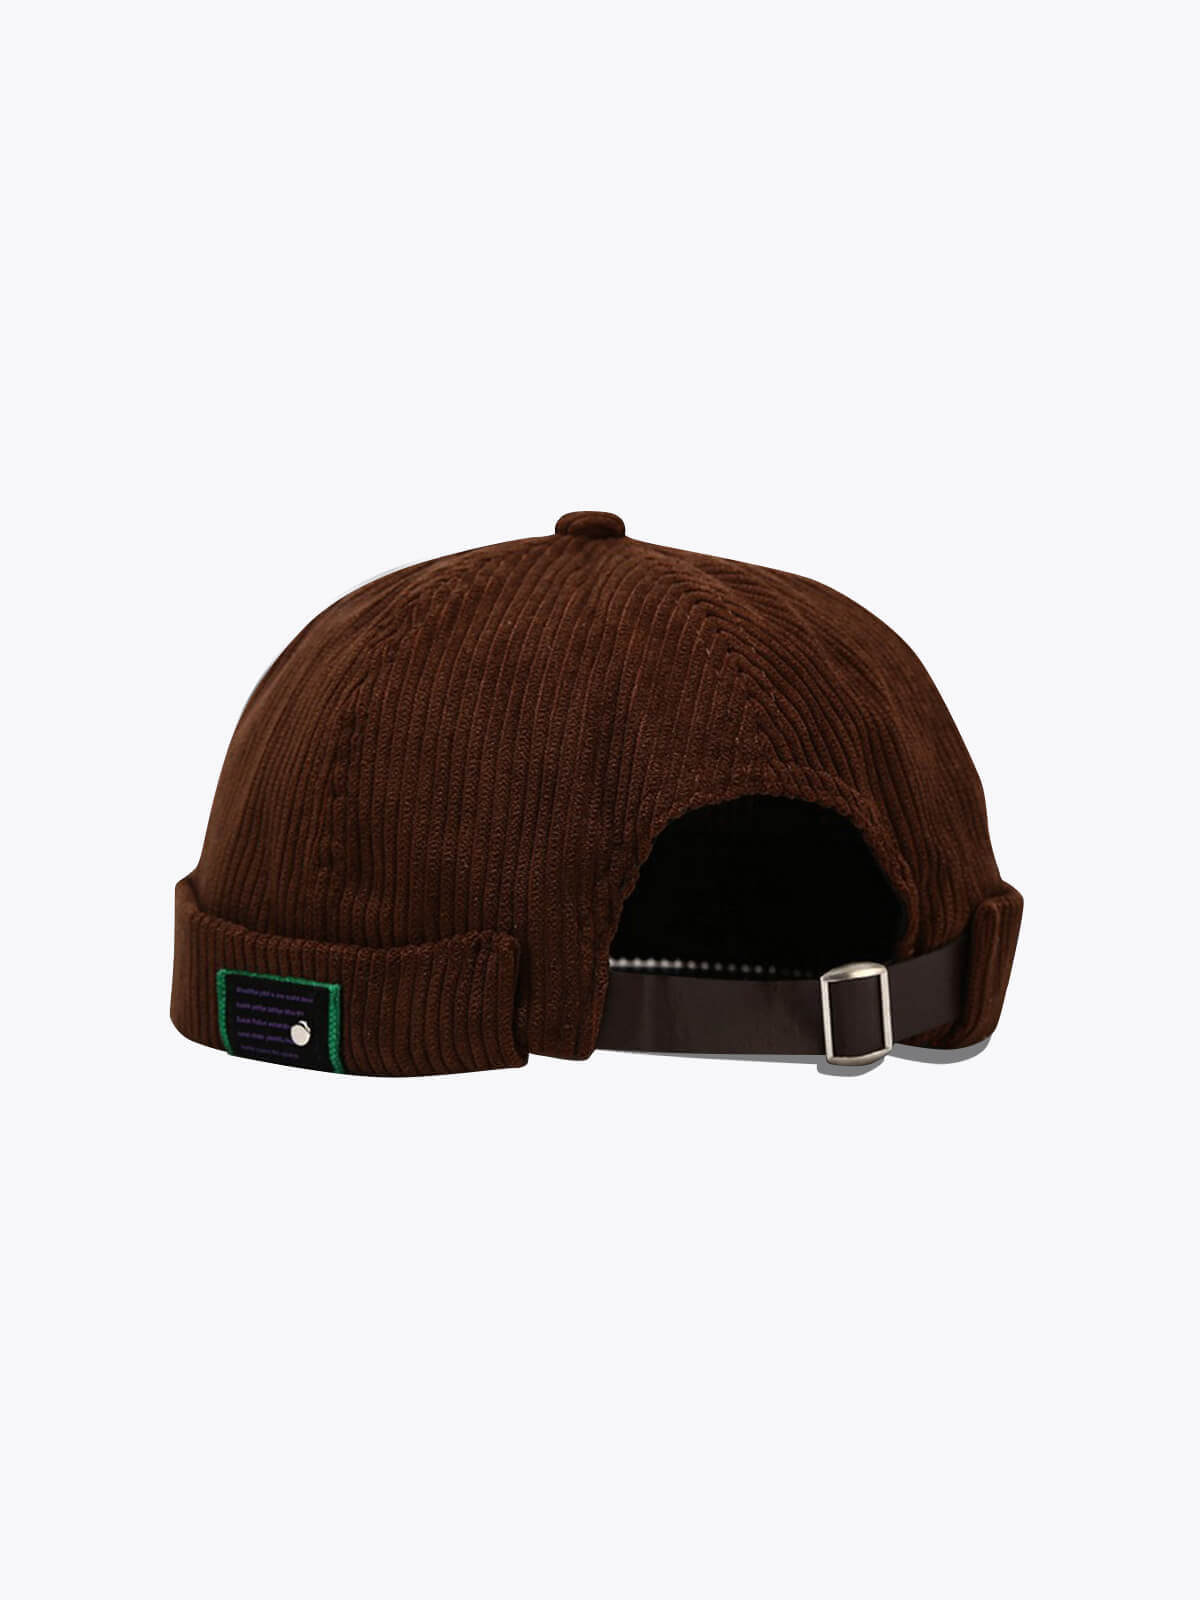 Urban Brown Brimless Docker Hat - Docker Hats